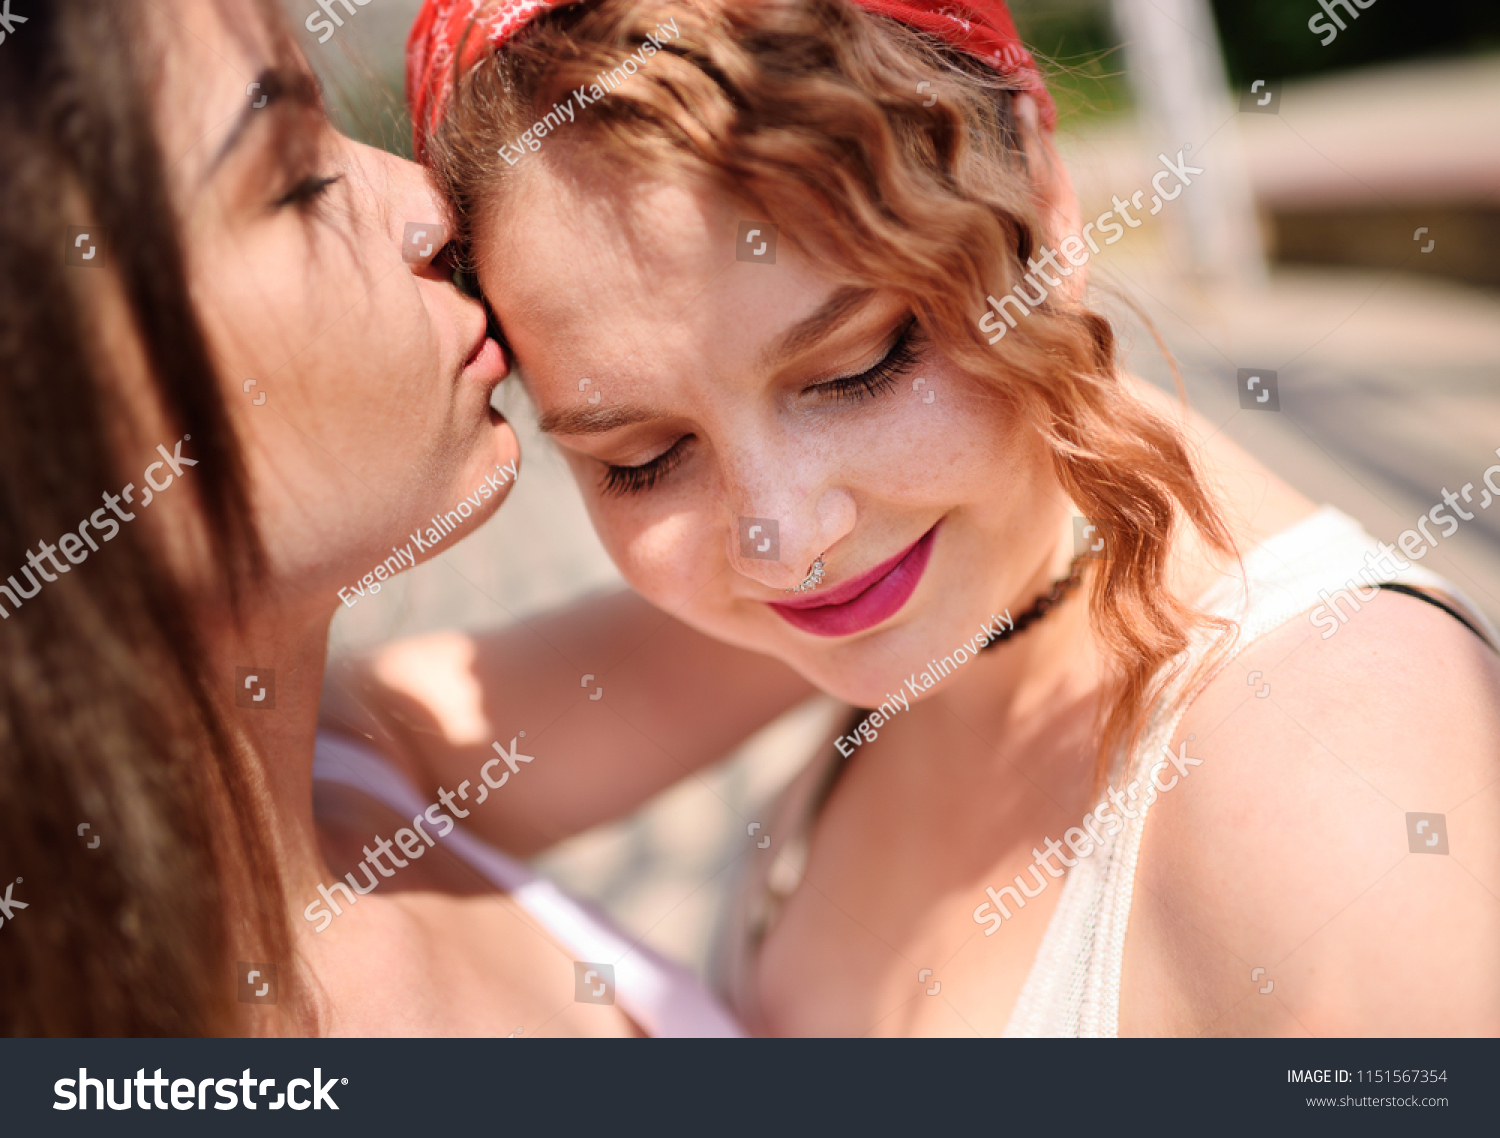 Lesbian kissing contest